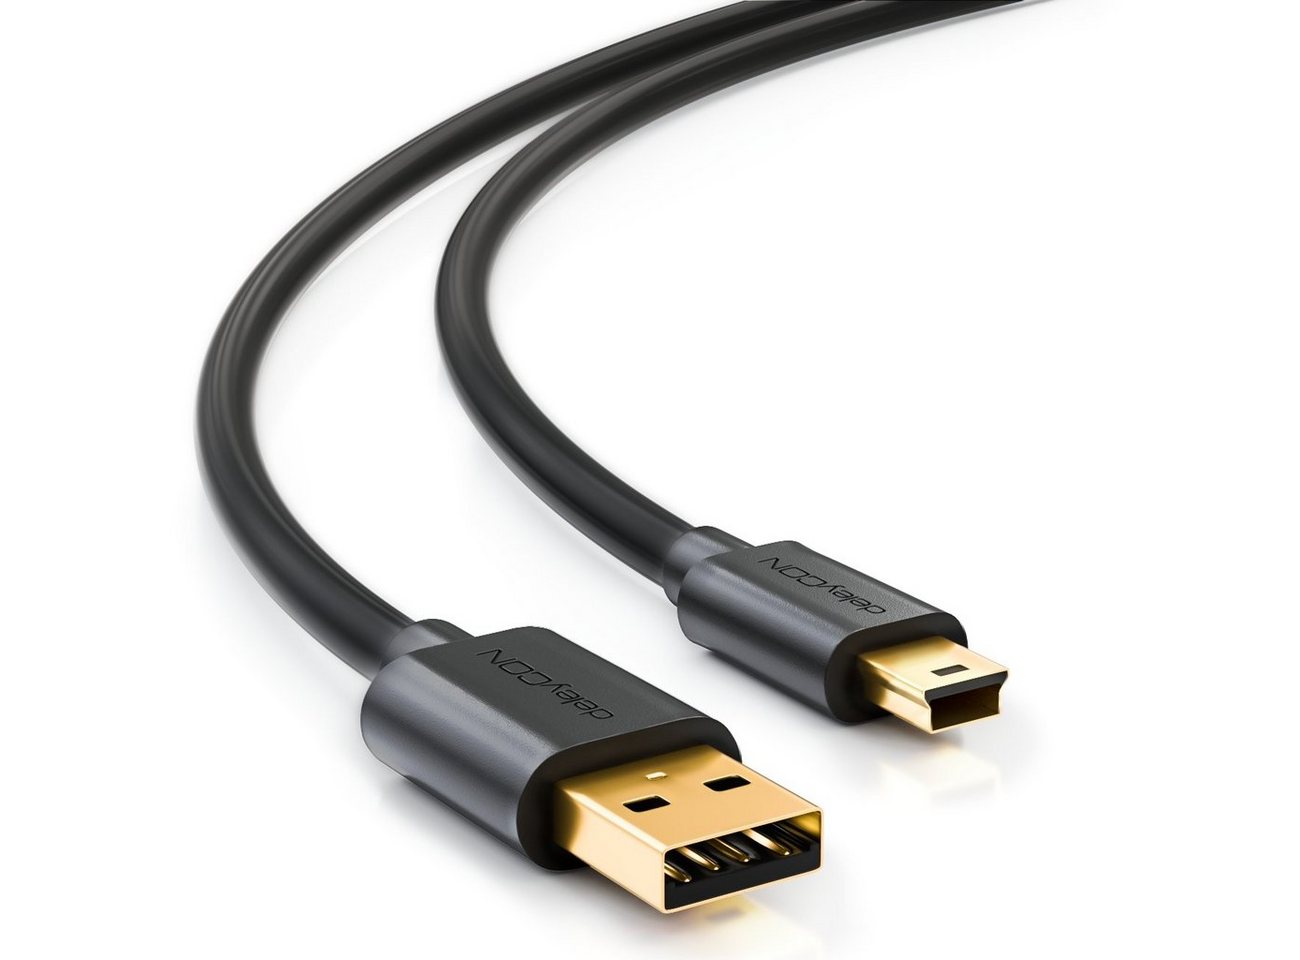 deleyCON deleyCON 1,5m Mini USB 2.0 Datenkabel - USB A-Stecker zu Mini USB-Kabel von deleyCON